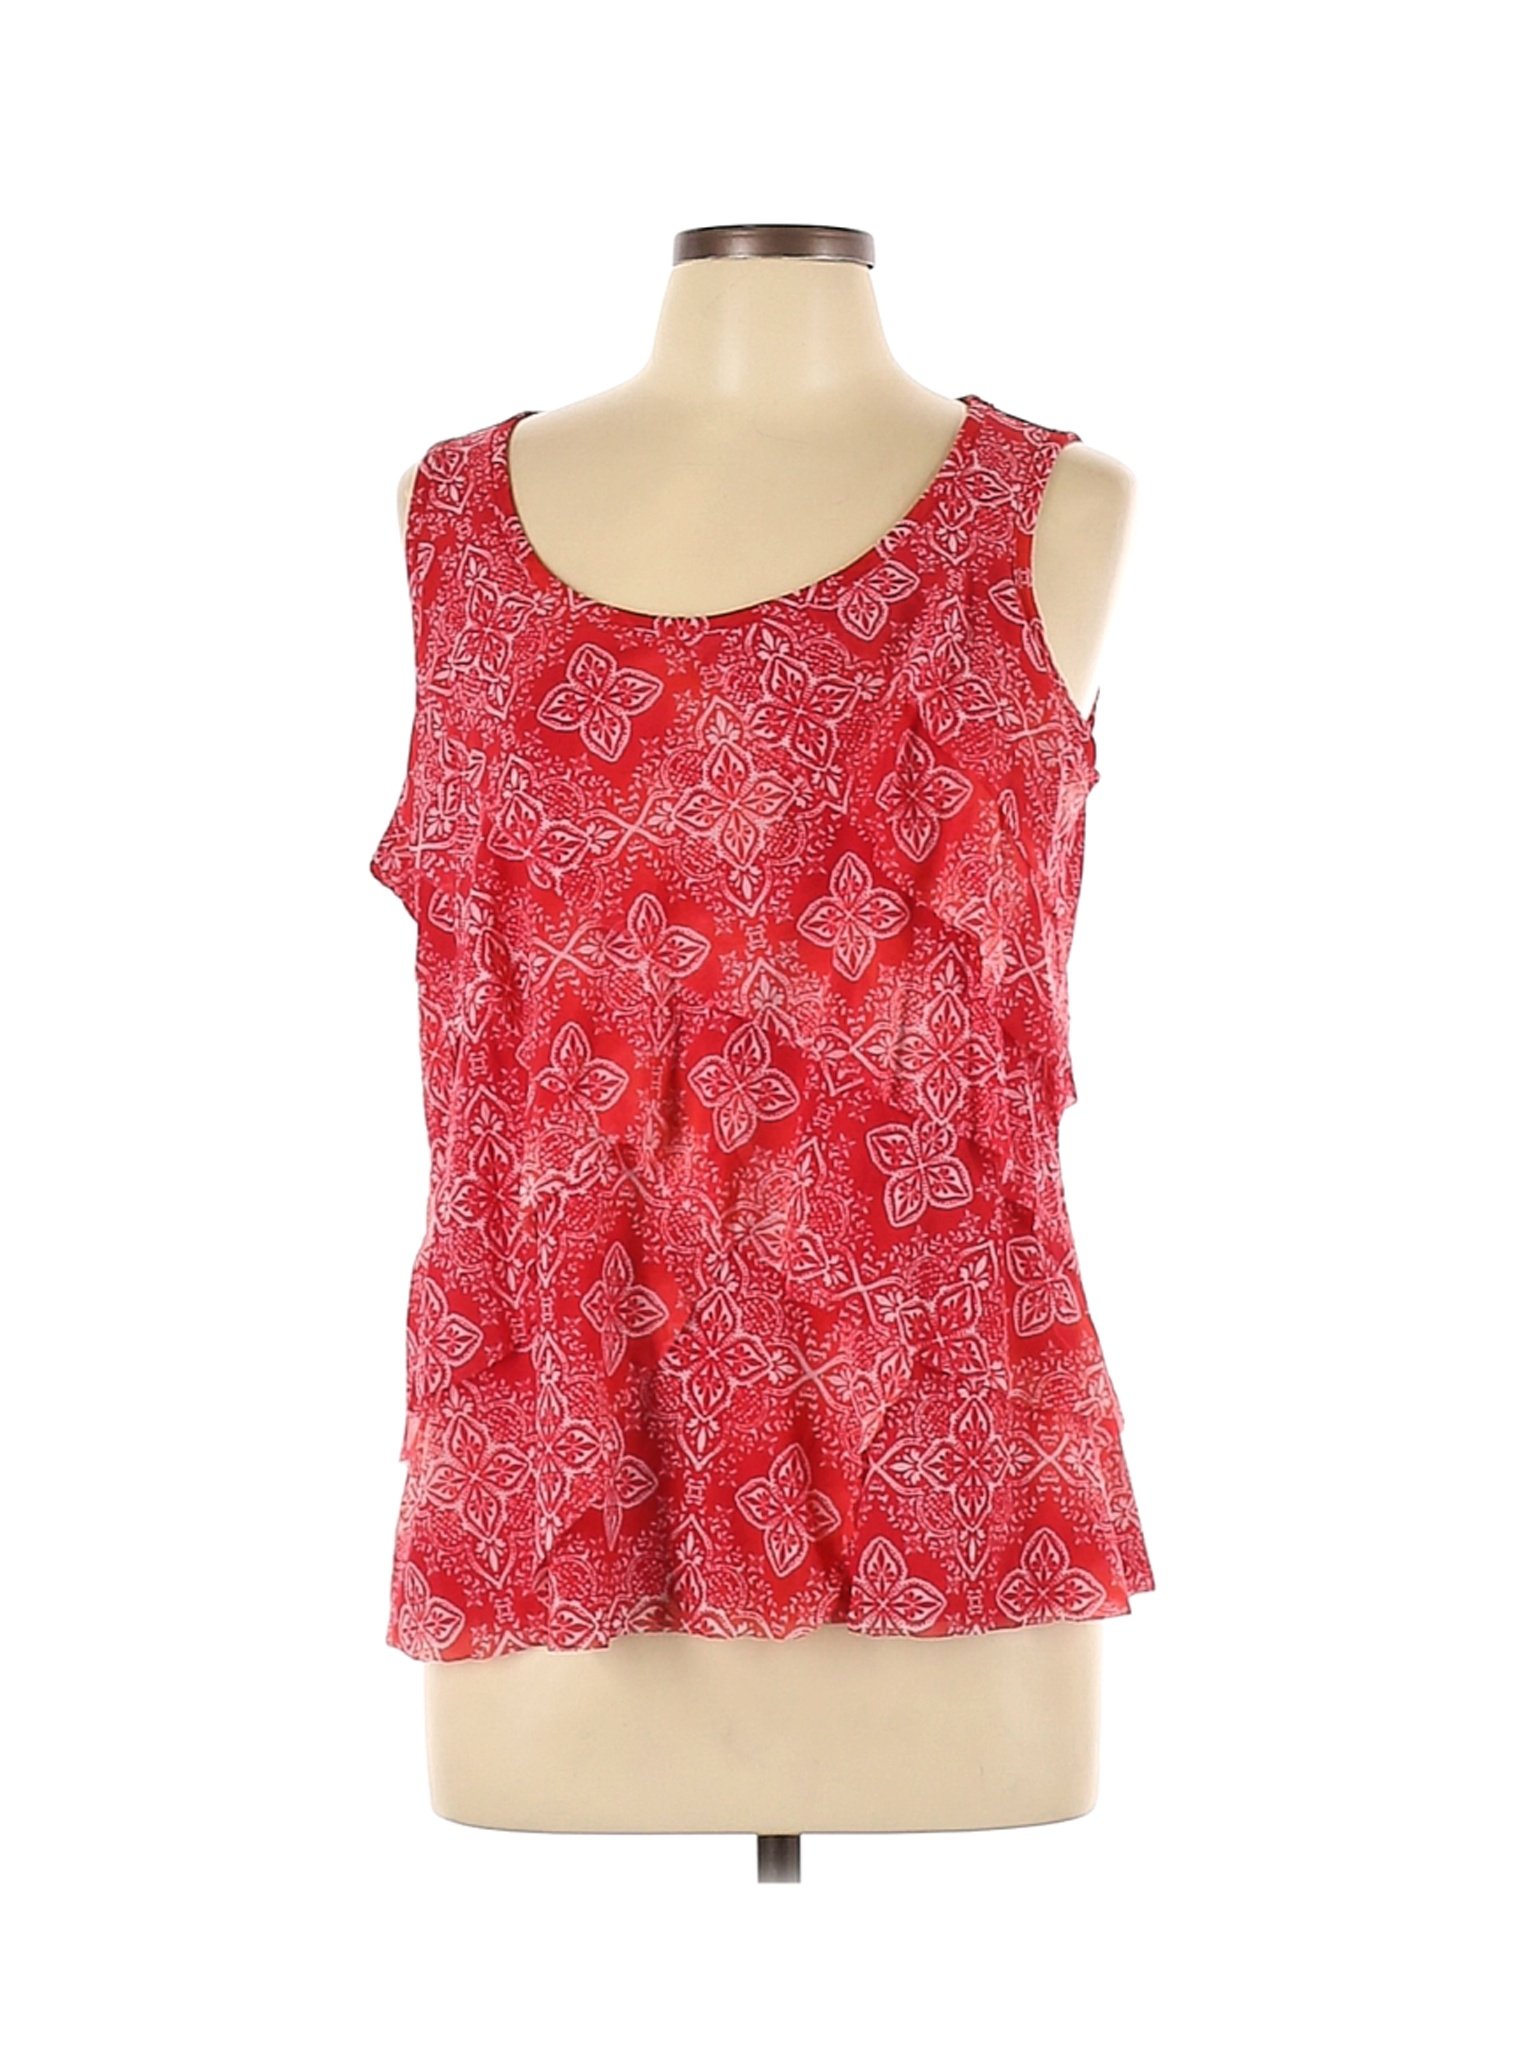 Westport Women Red Sleeveless Top XL Petites | eBay